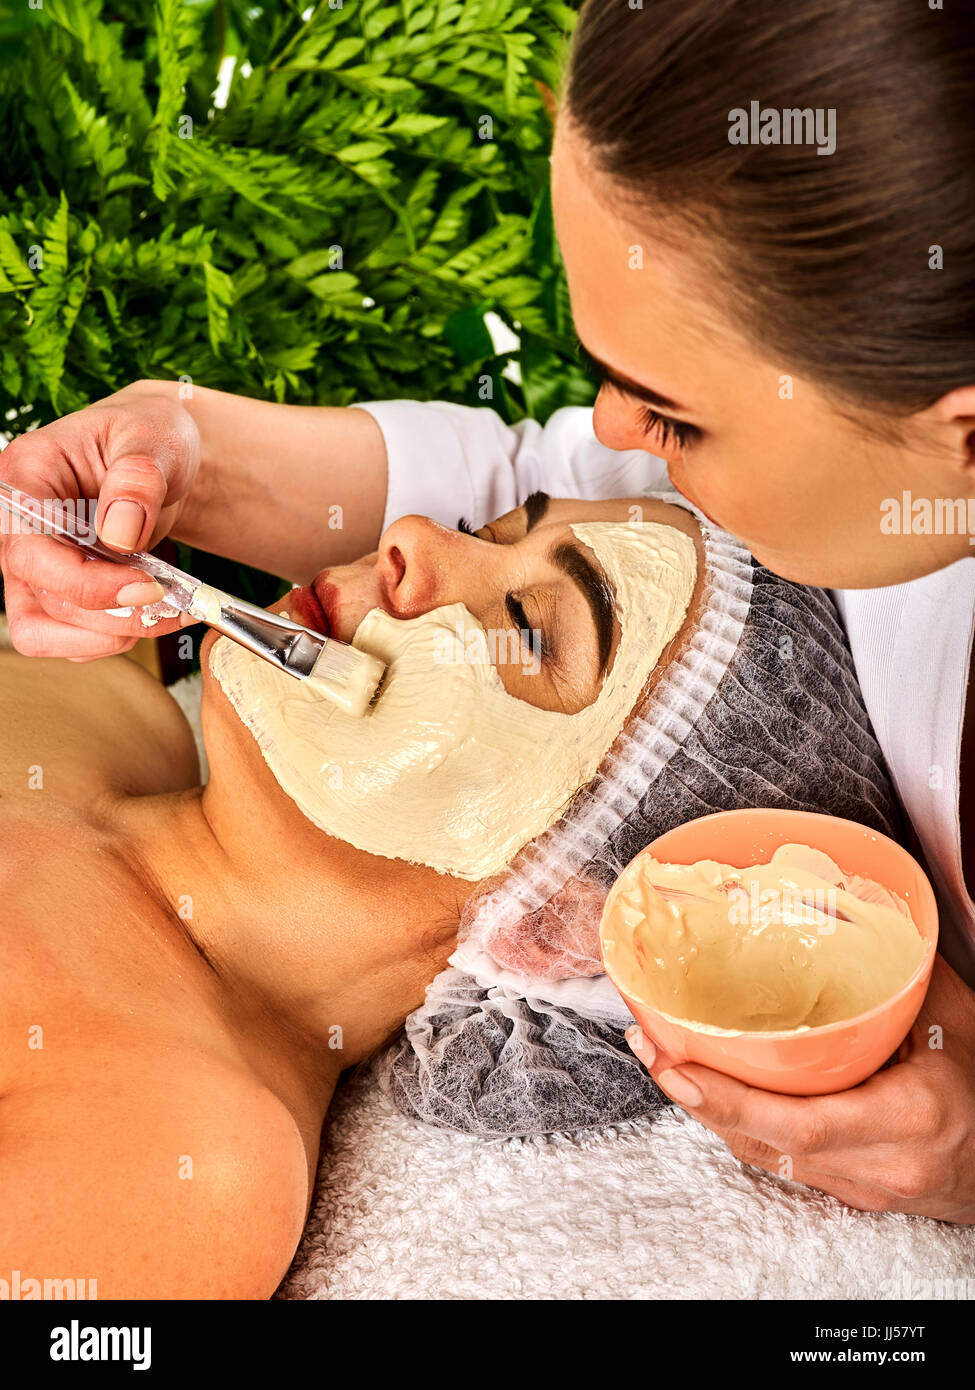 Collagen face mask . Facial skin treatment. Woman receiving cosmetic procedure. Stock Photo